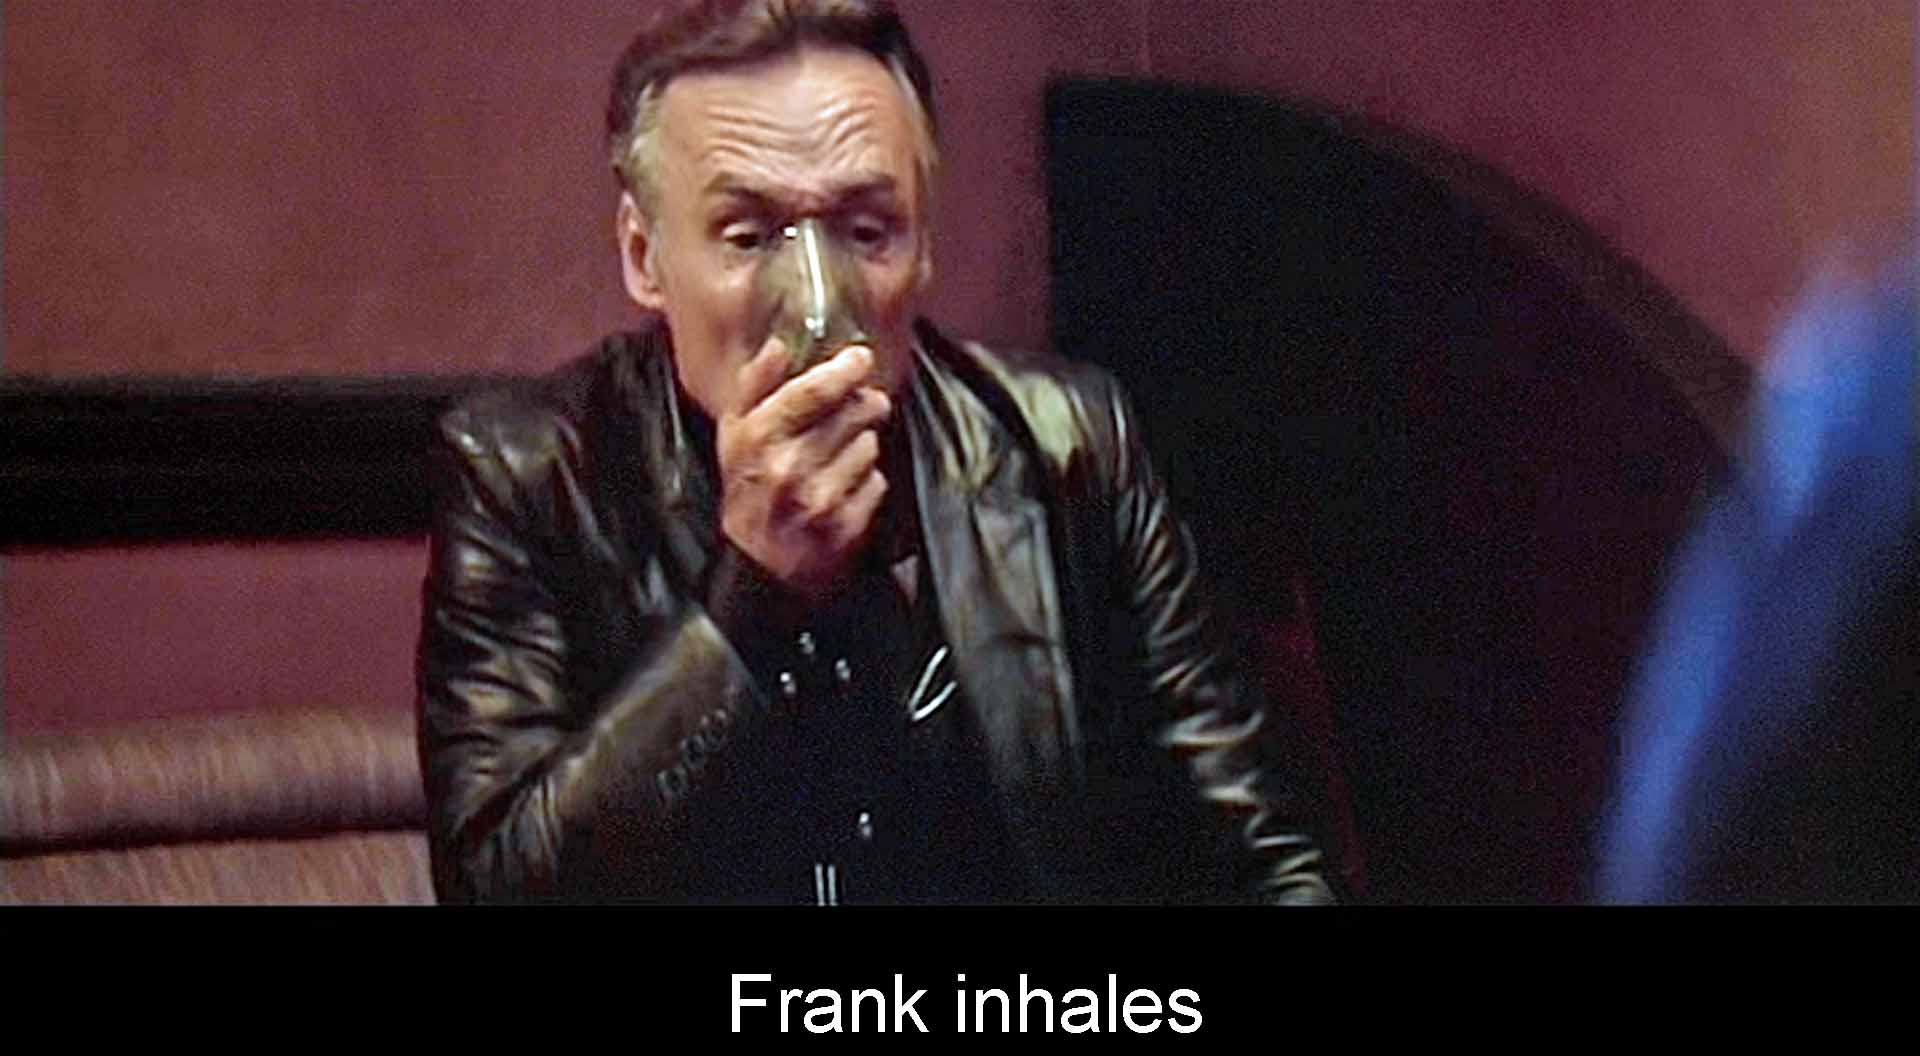 Frank inhales